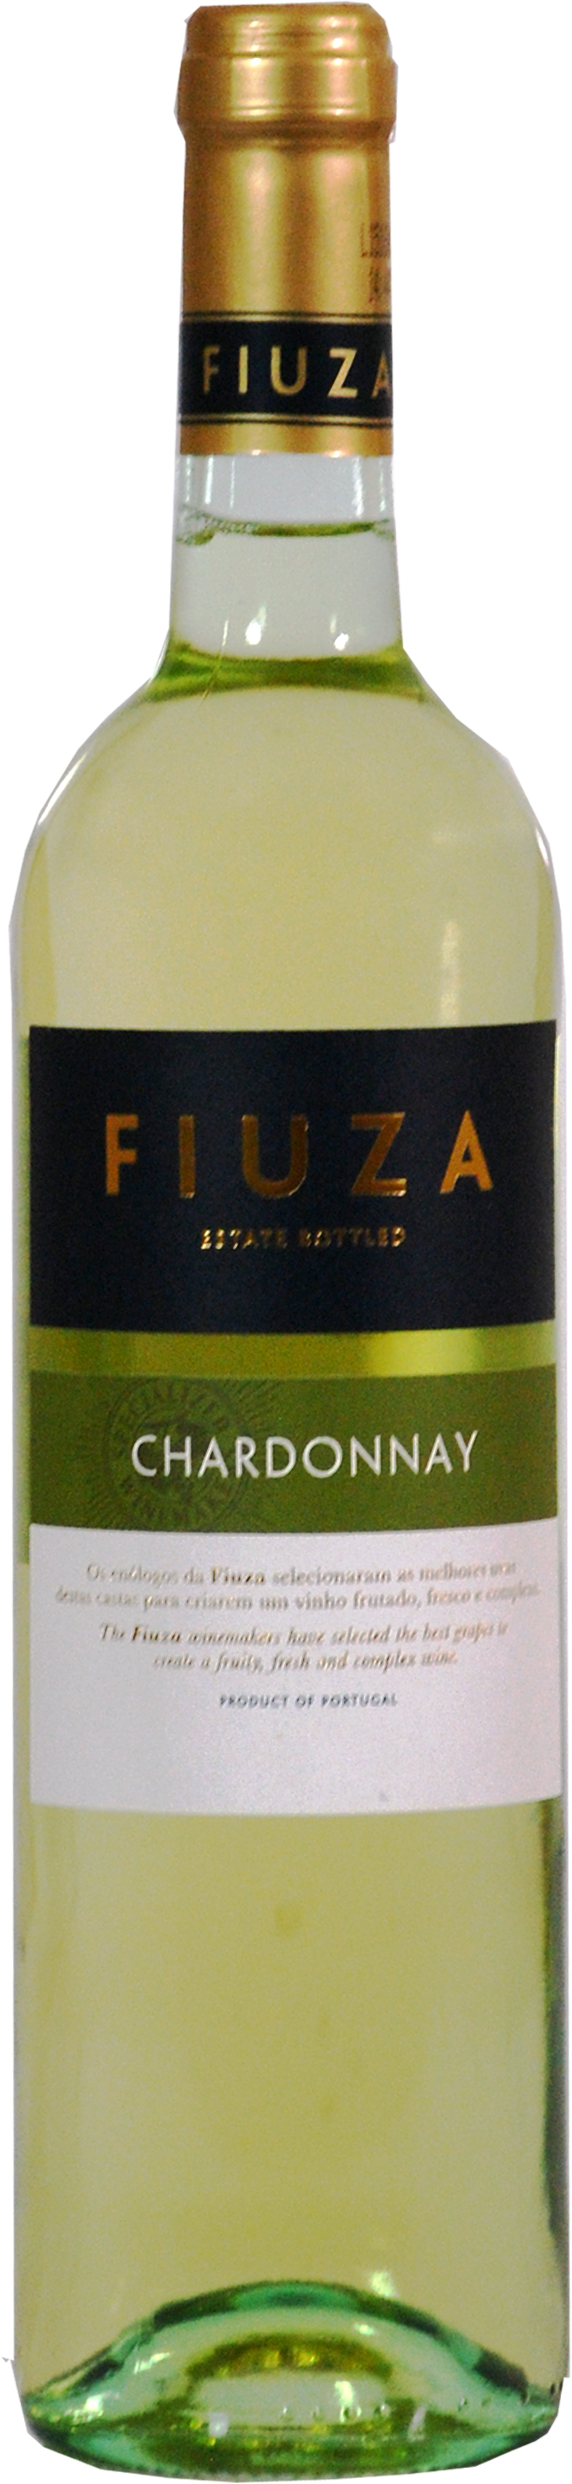 Fiuza Chardonnay 2015